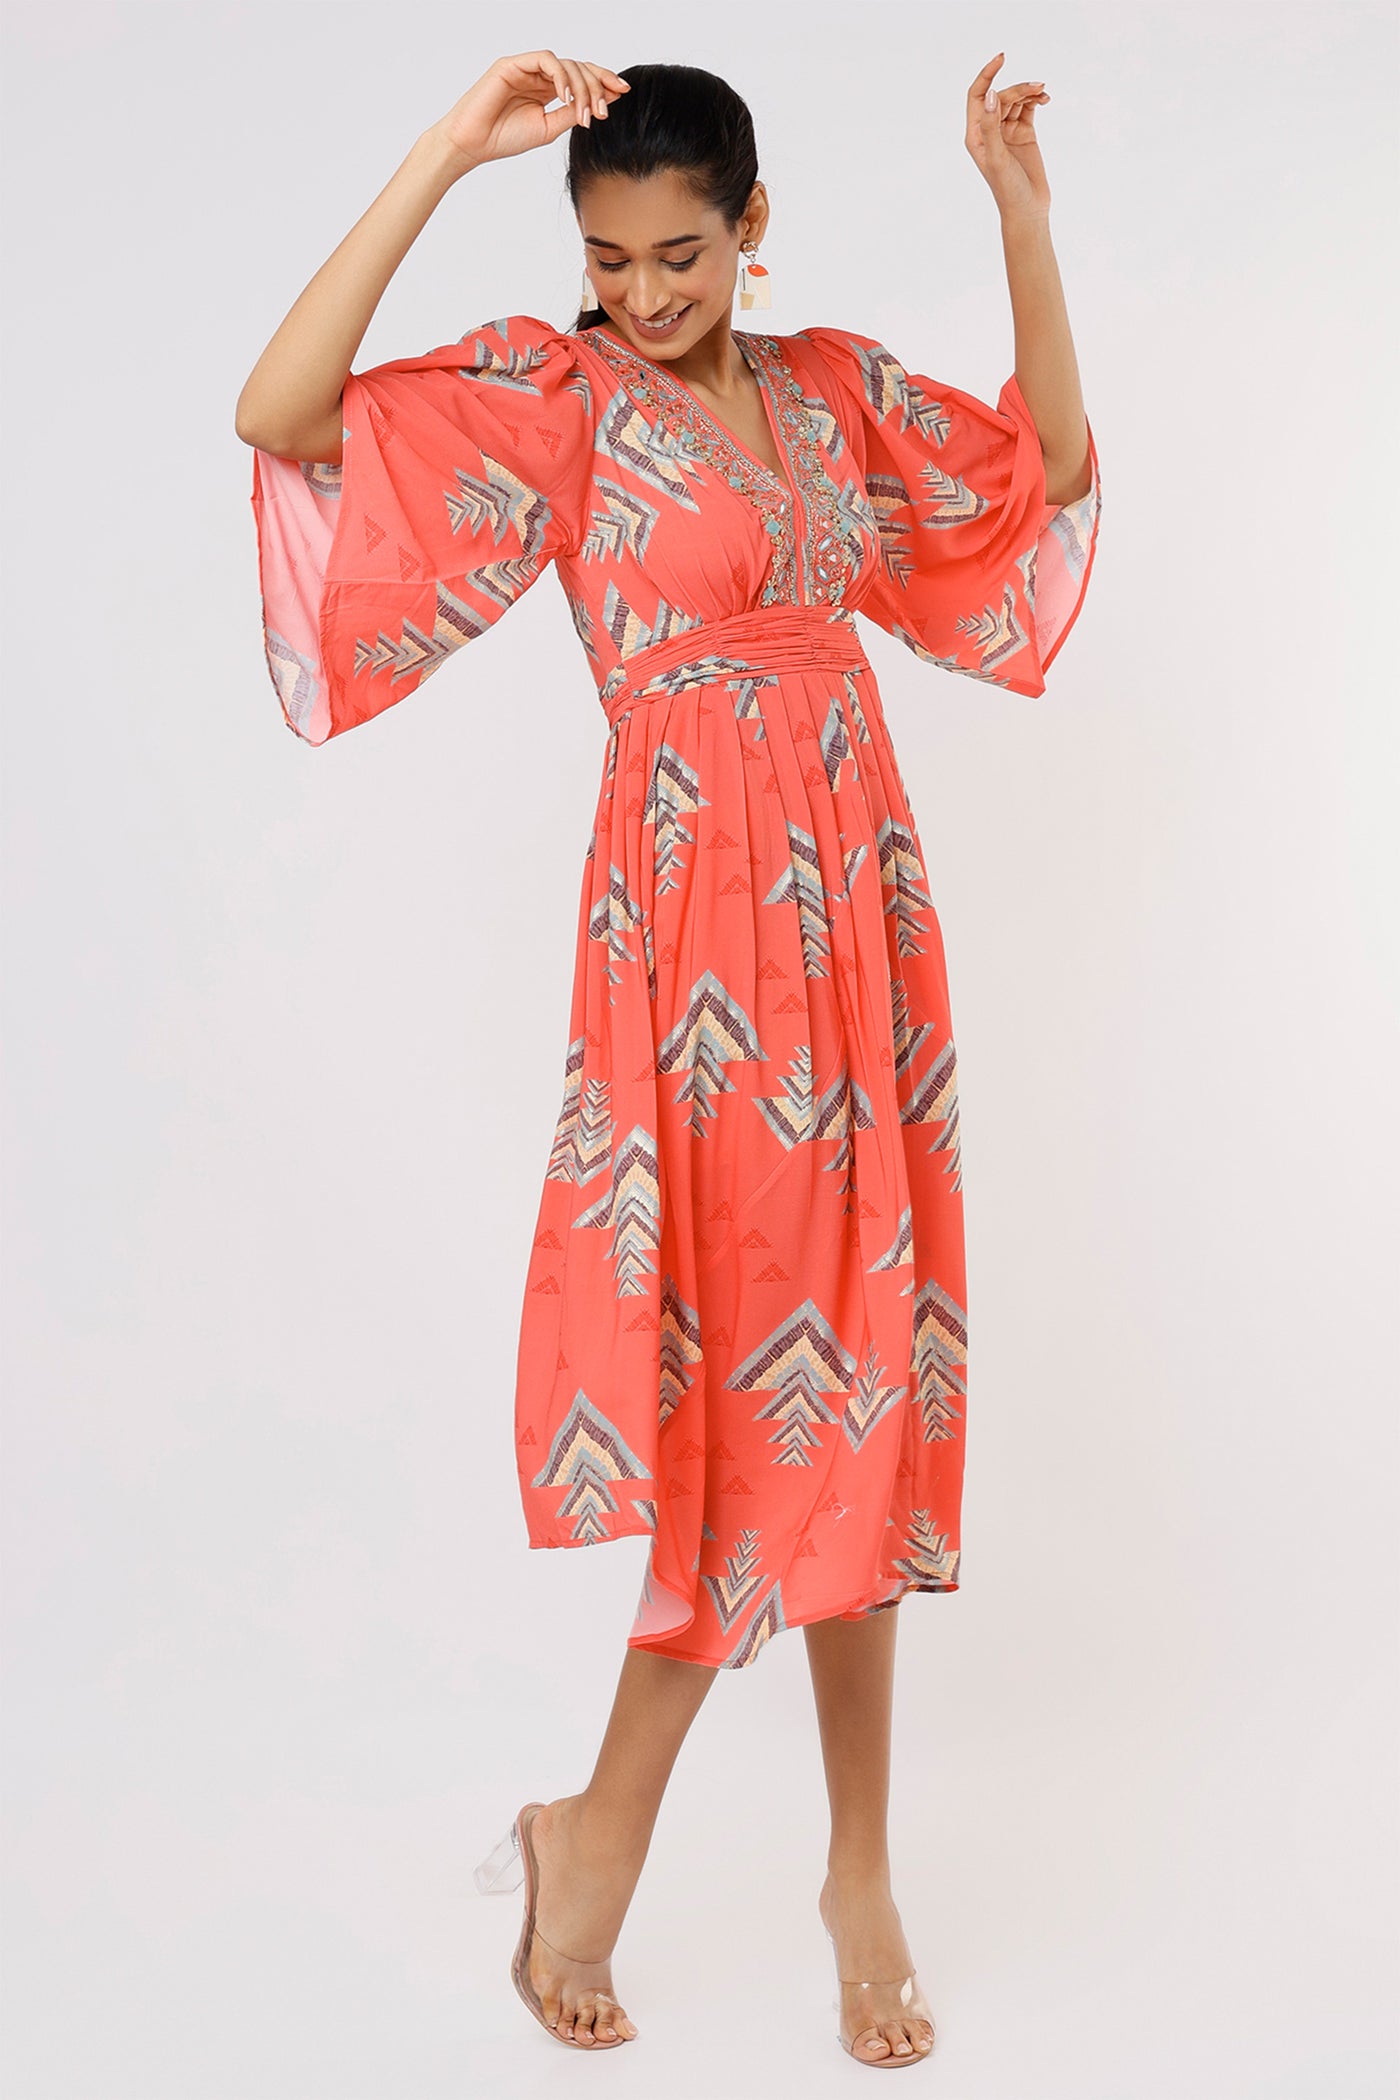 Gopi vaid Lara Sleeved Long Dress coral festive Indian designer wear online shopping melange singapore